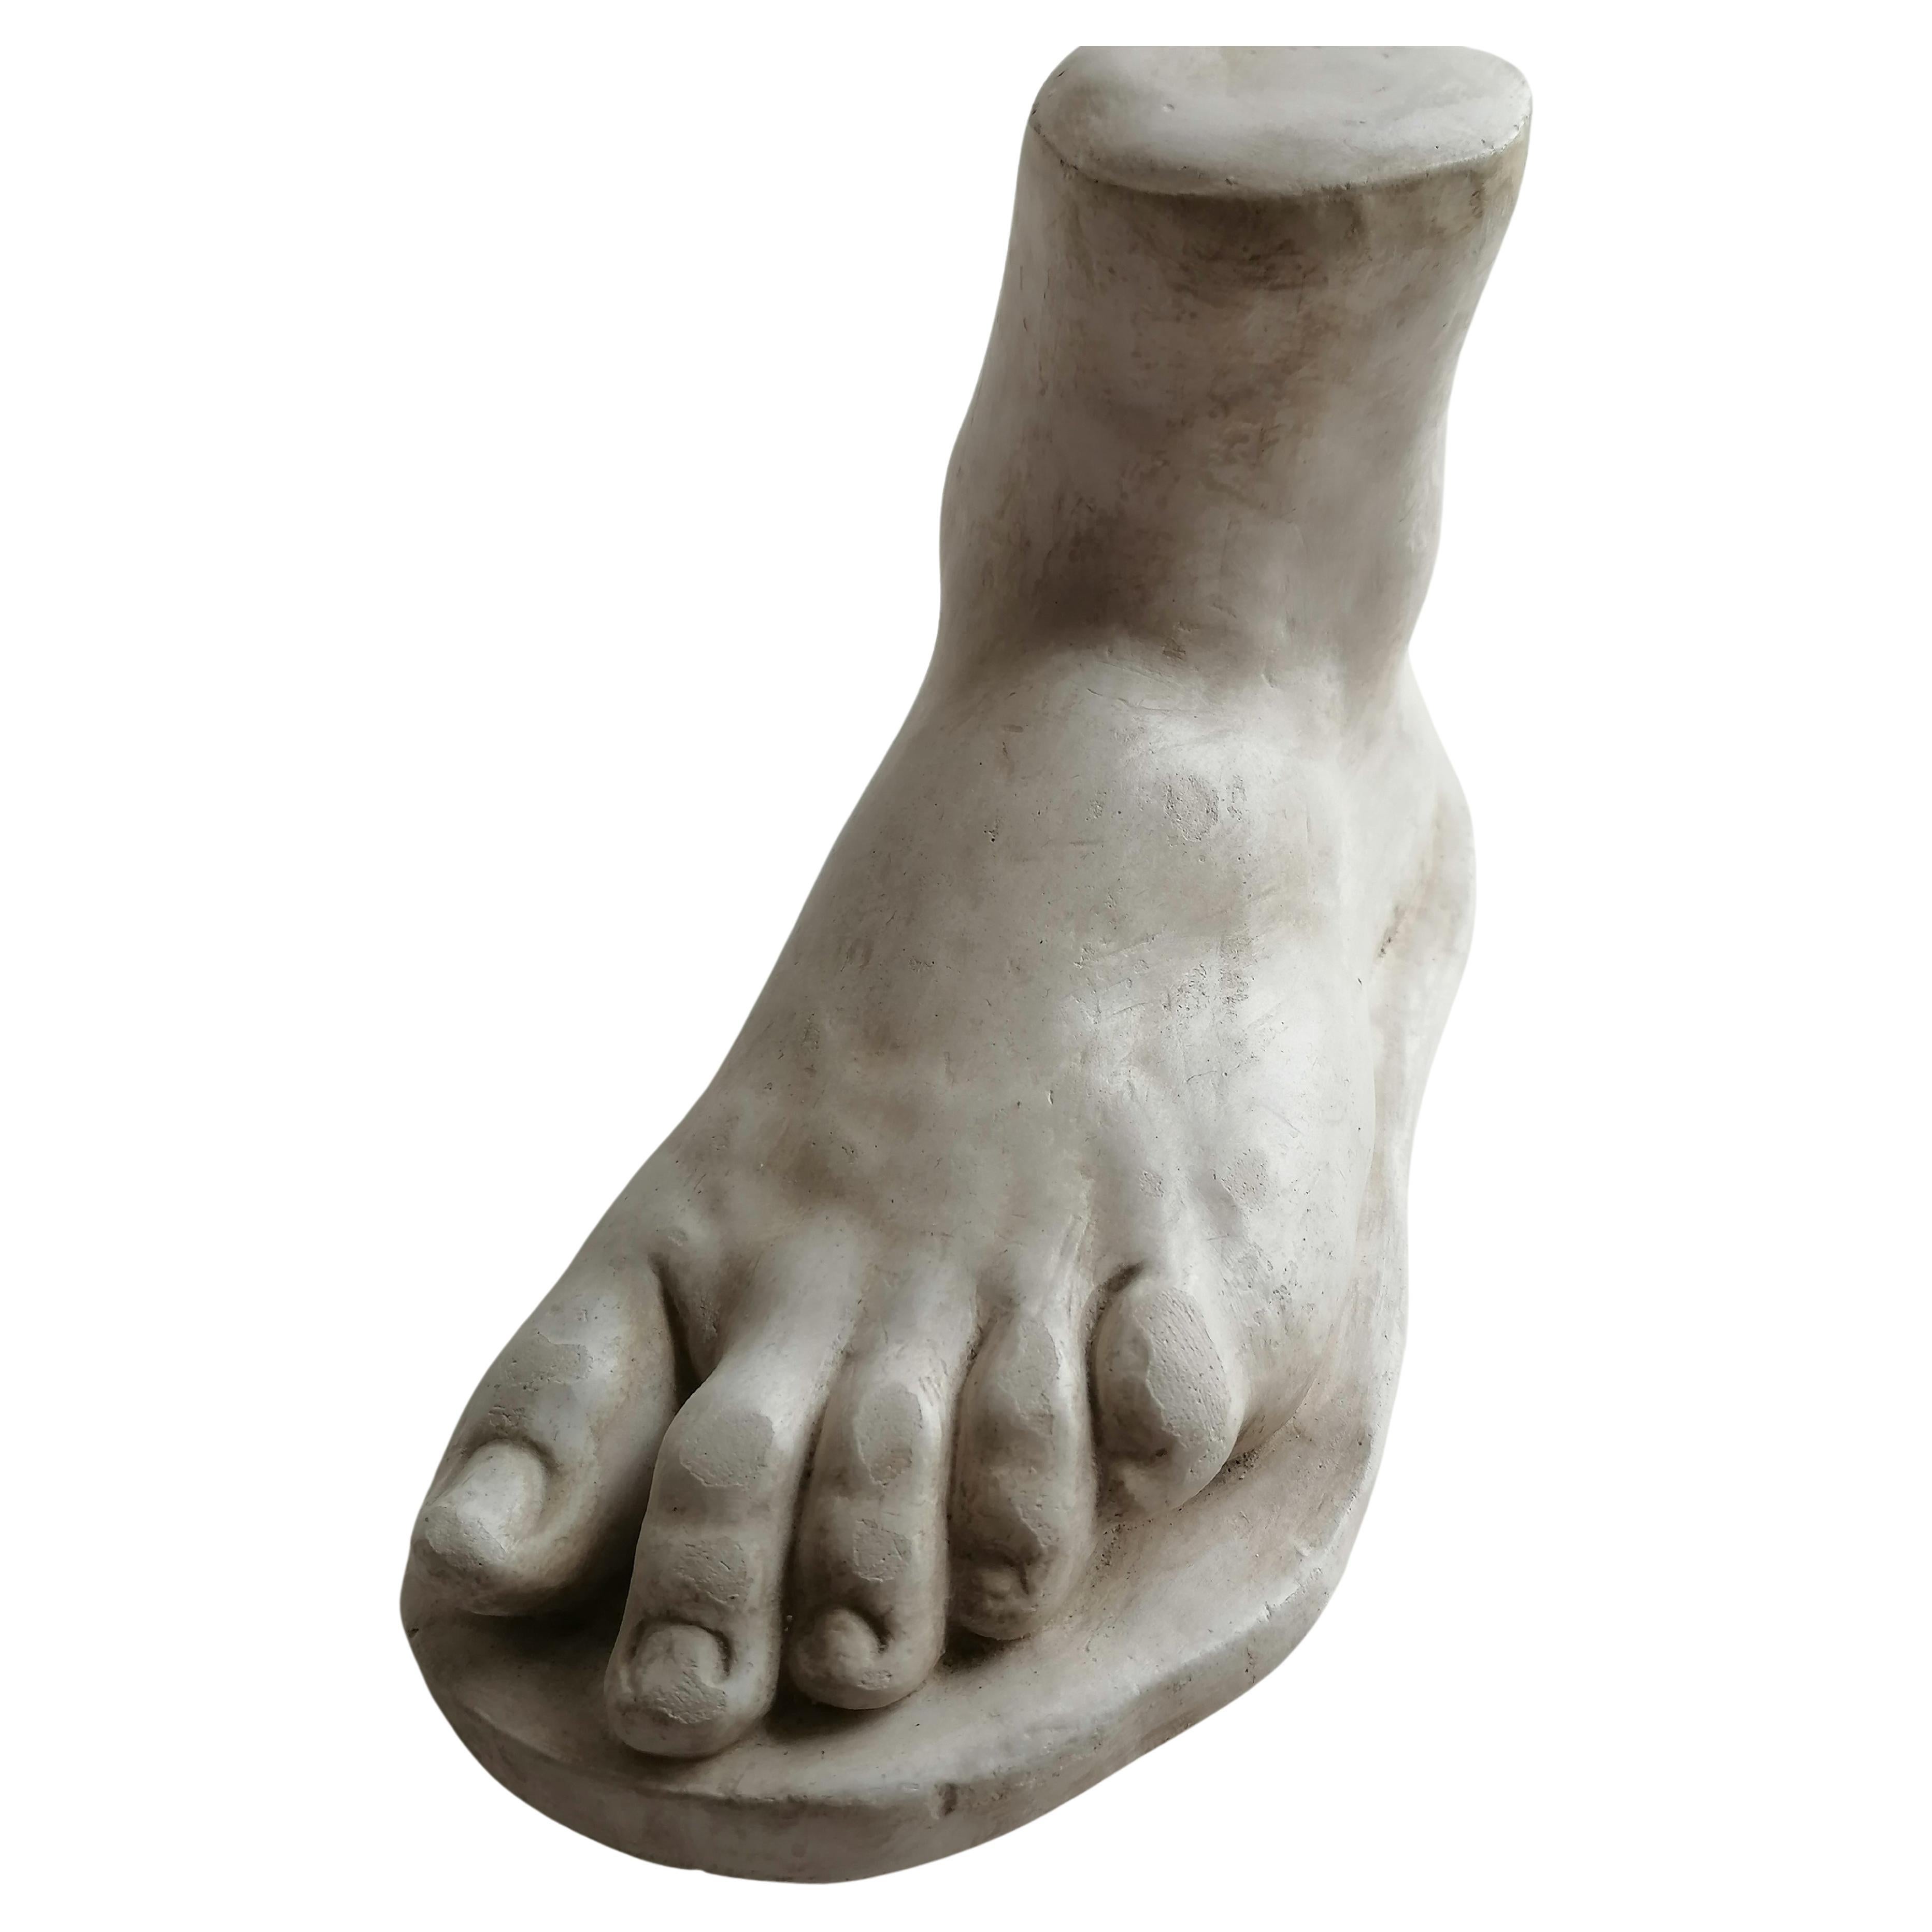 Sculpture d'un pied de style classique - Marmorina impasto (marbre de Bruxelles)